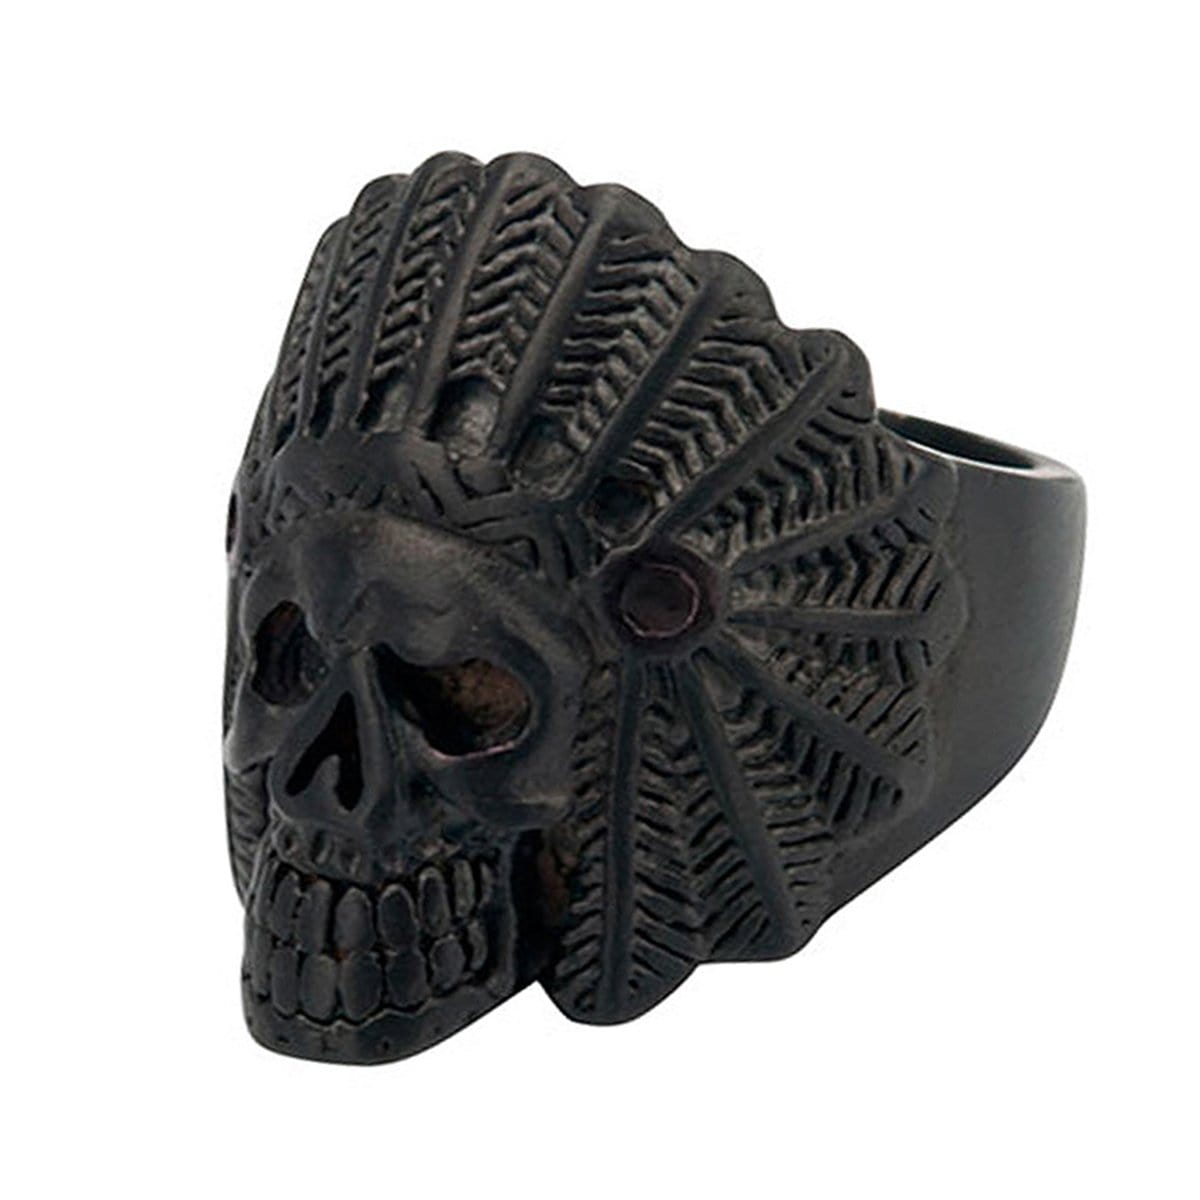 INOX JEWELRY Rings Black Stainless Steel Native American Tribal Chief Skull Ring